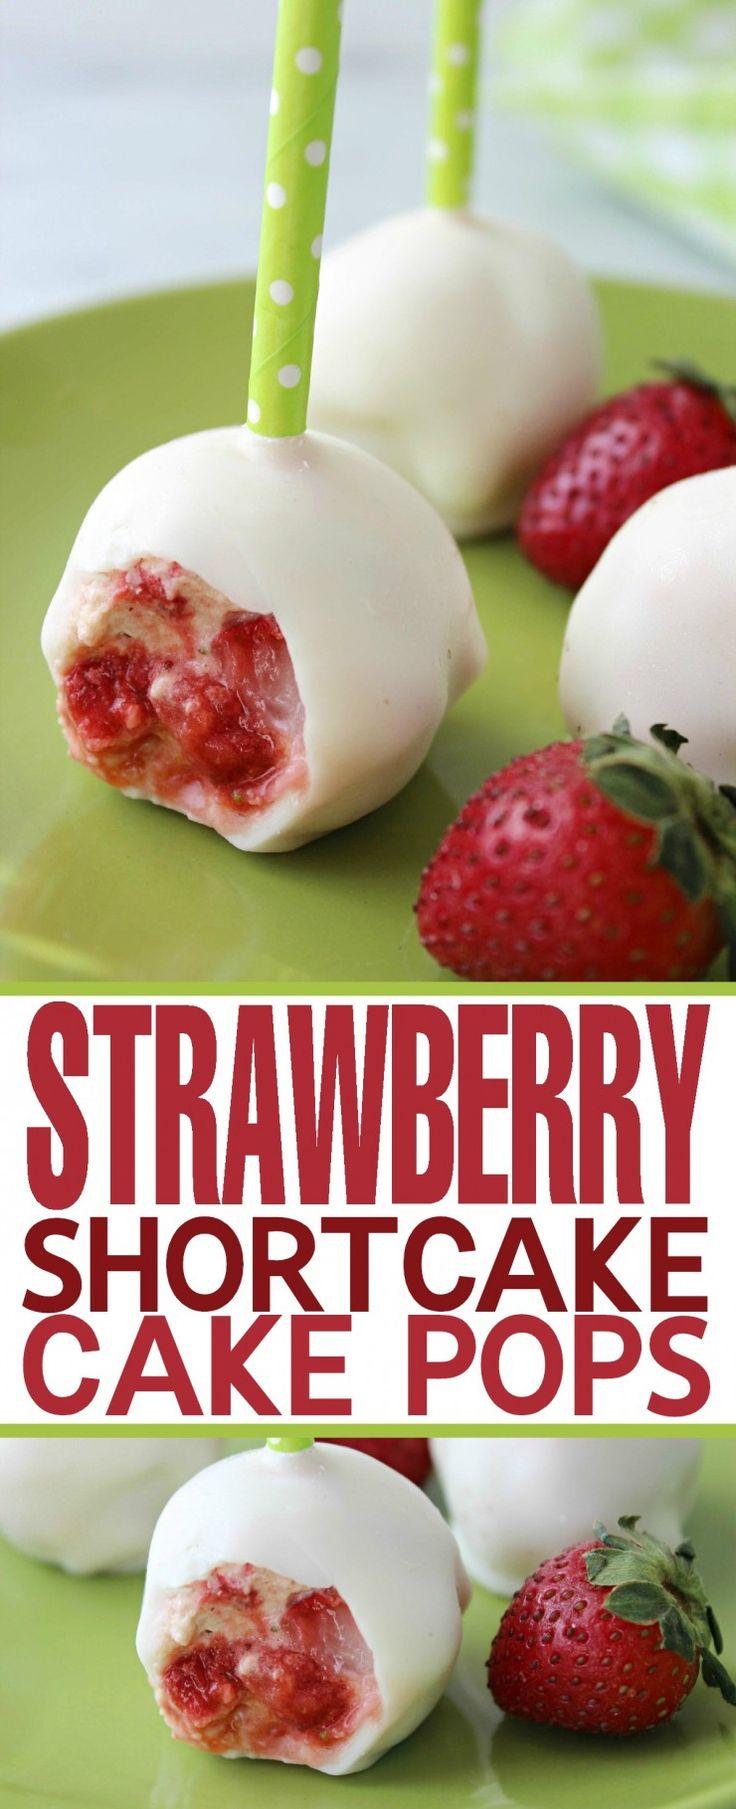 Hochzeit - Strawberry Shortcake Cake Pops